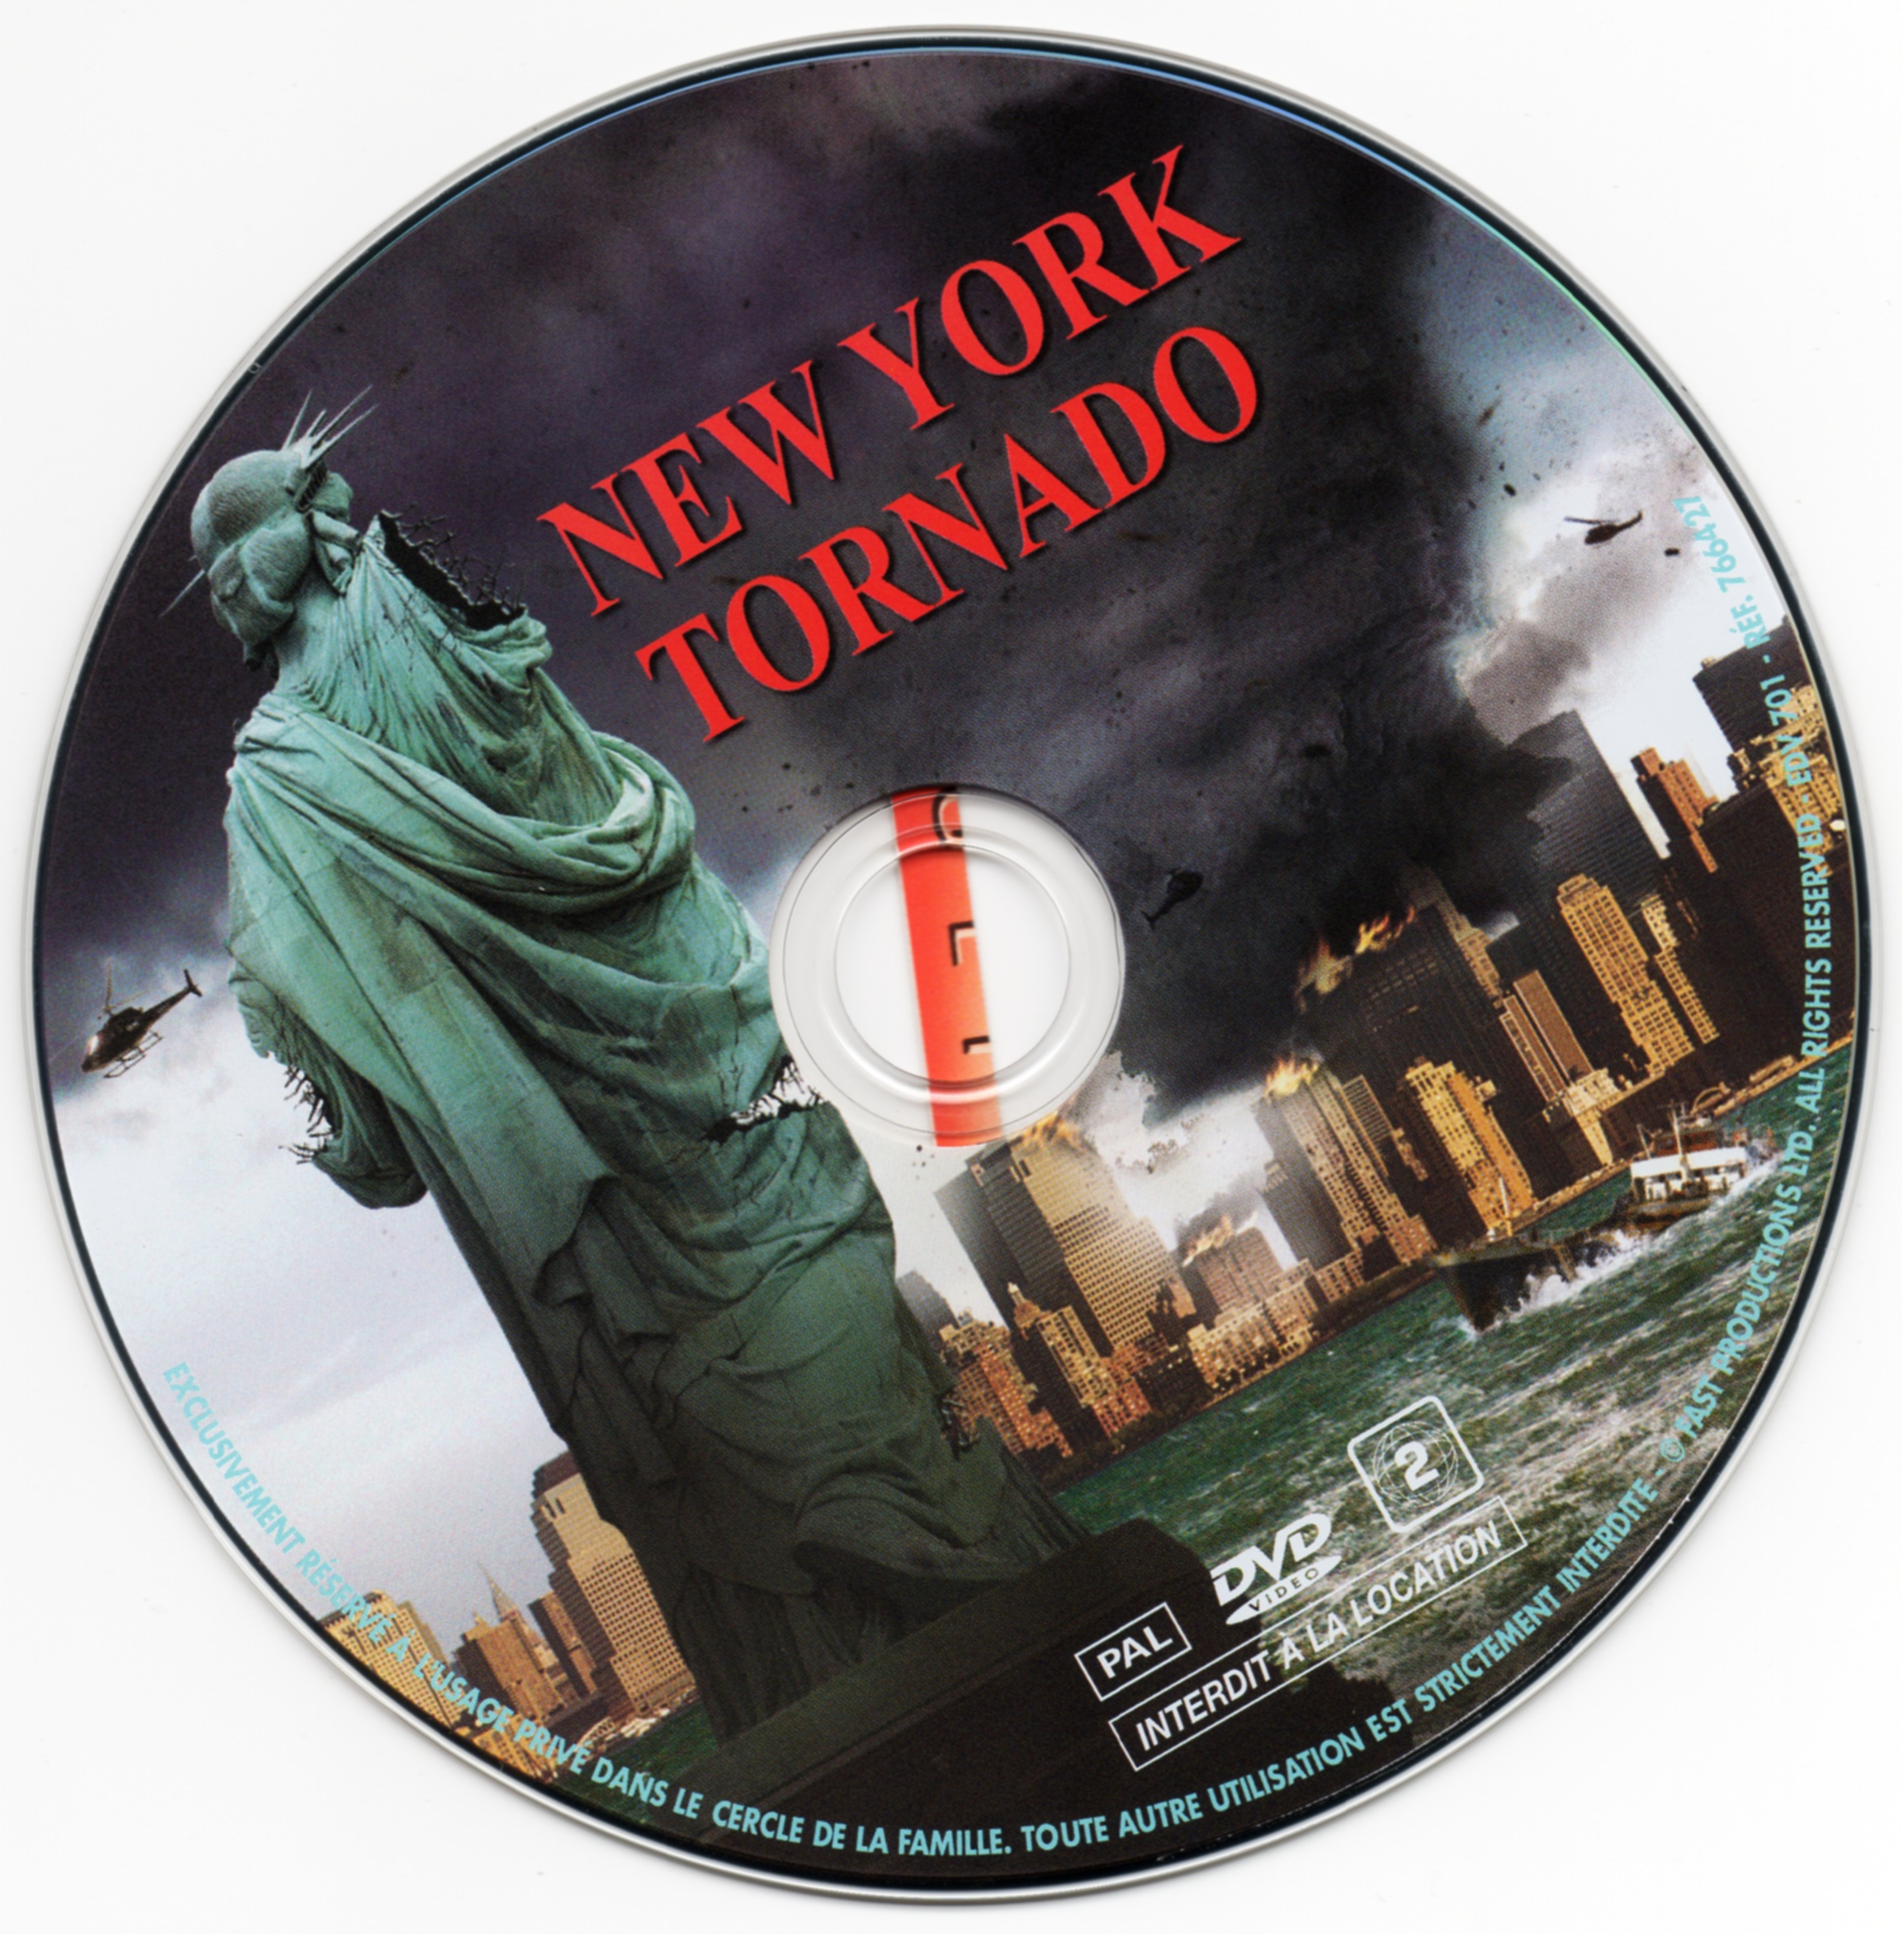 New York tornado